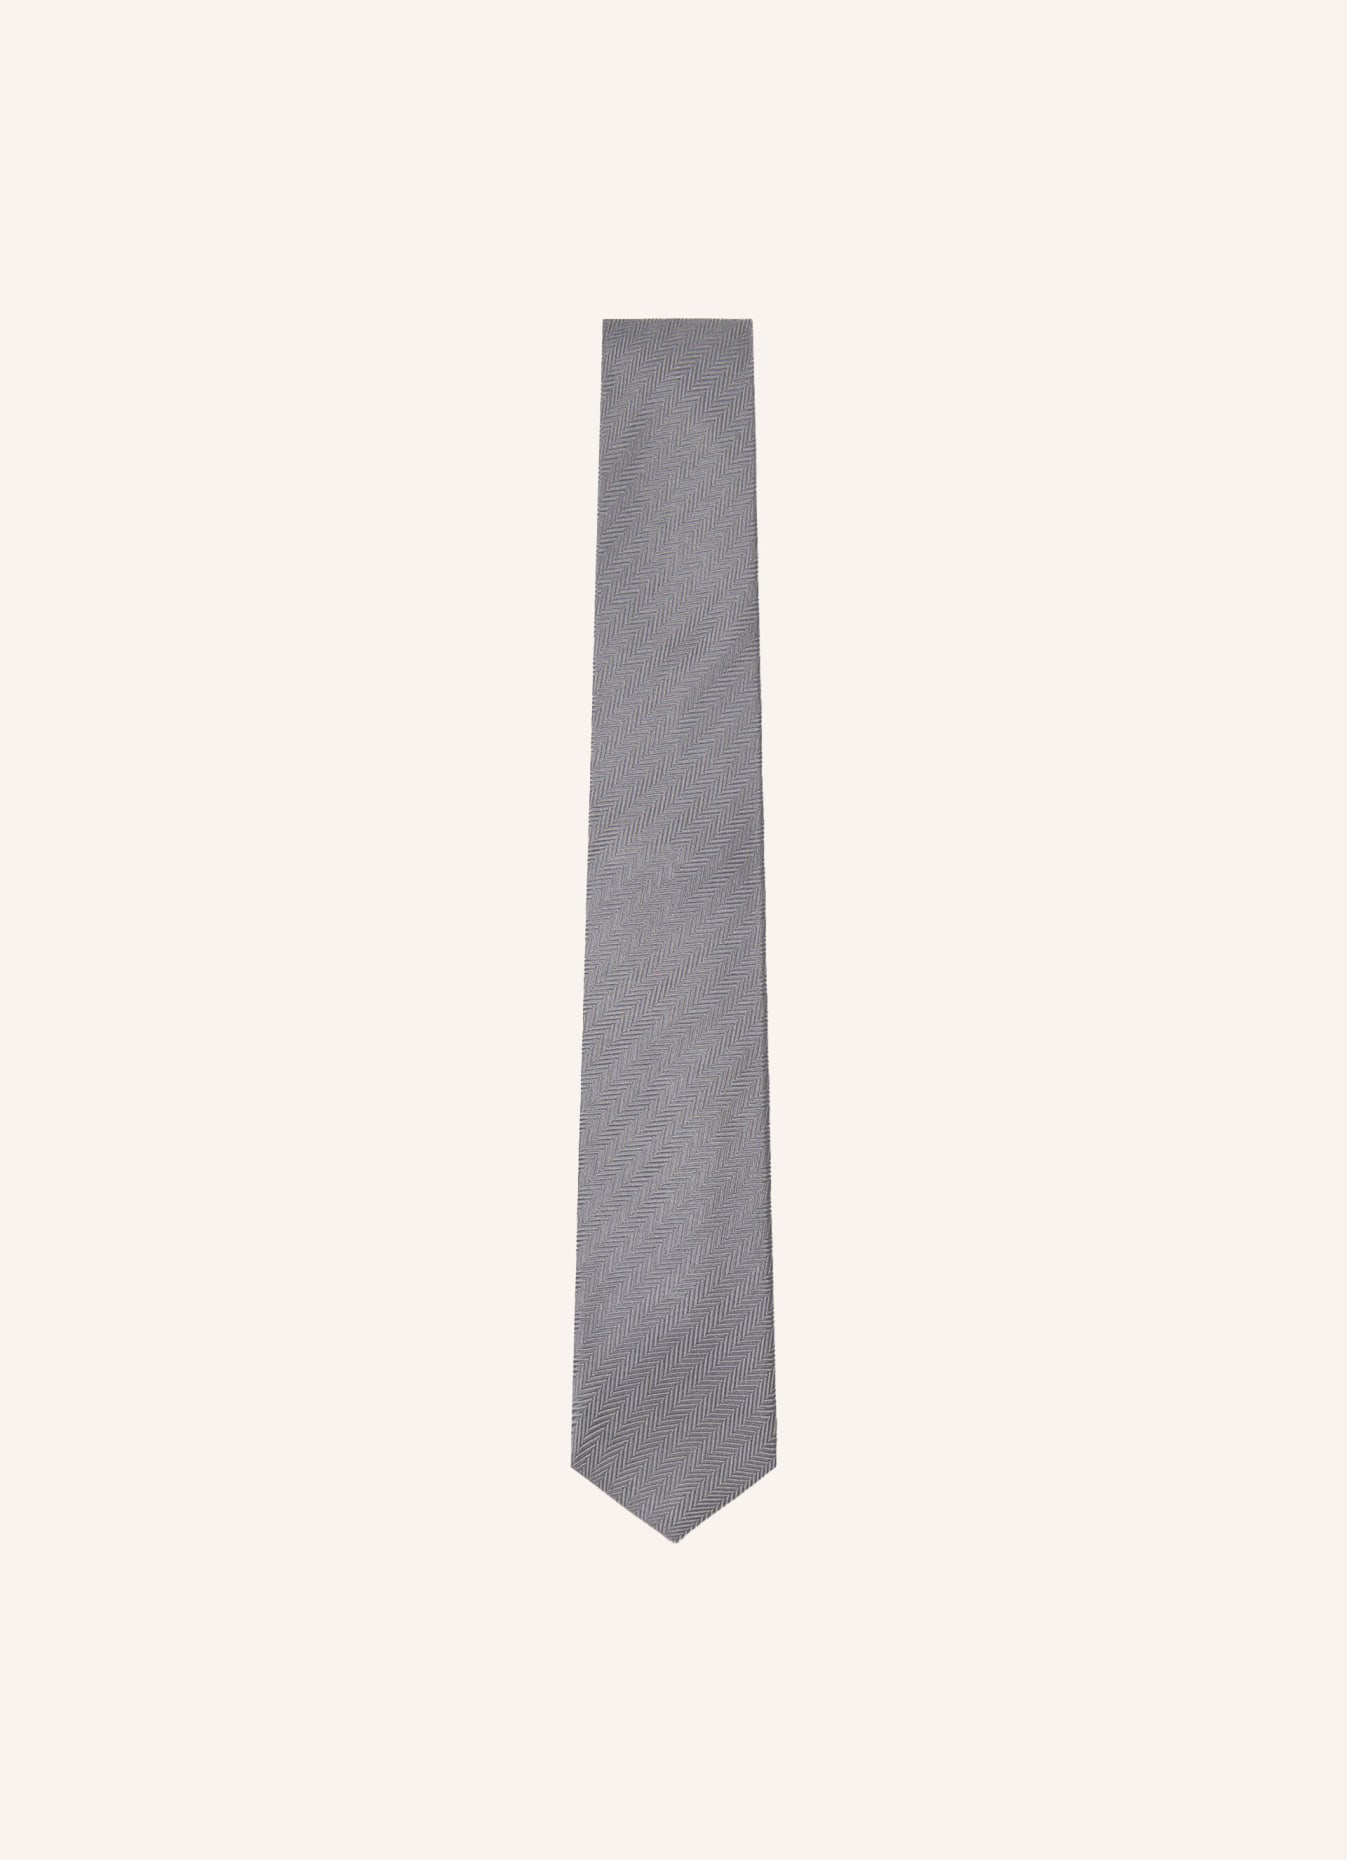 HACKETT LONDON Krawatte MELANGE HERRINGBONE, Farbe: GRAU (Bild 1)